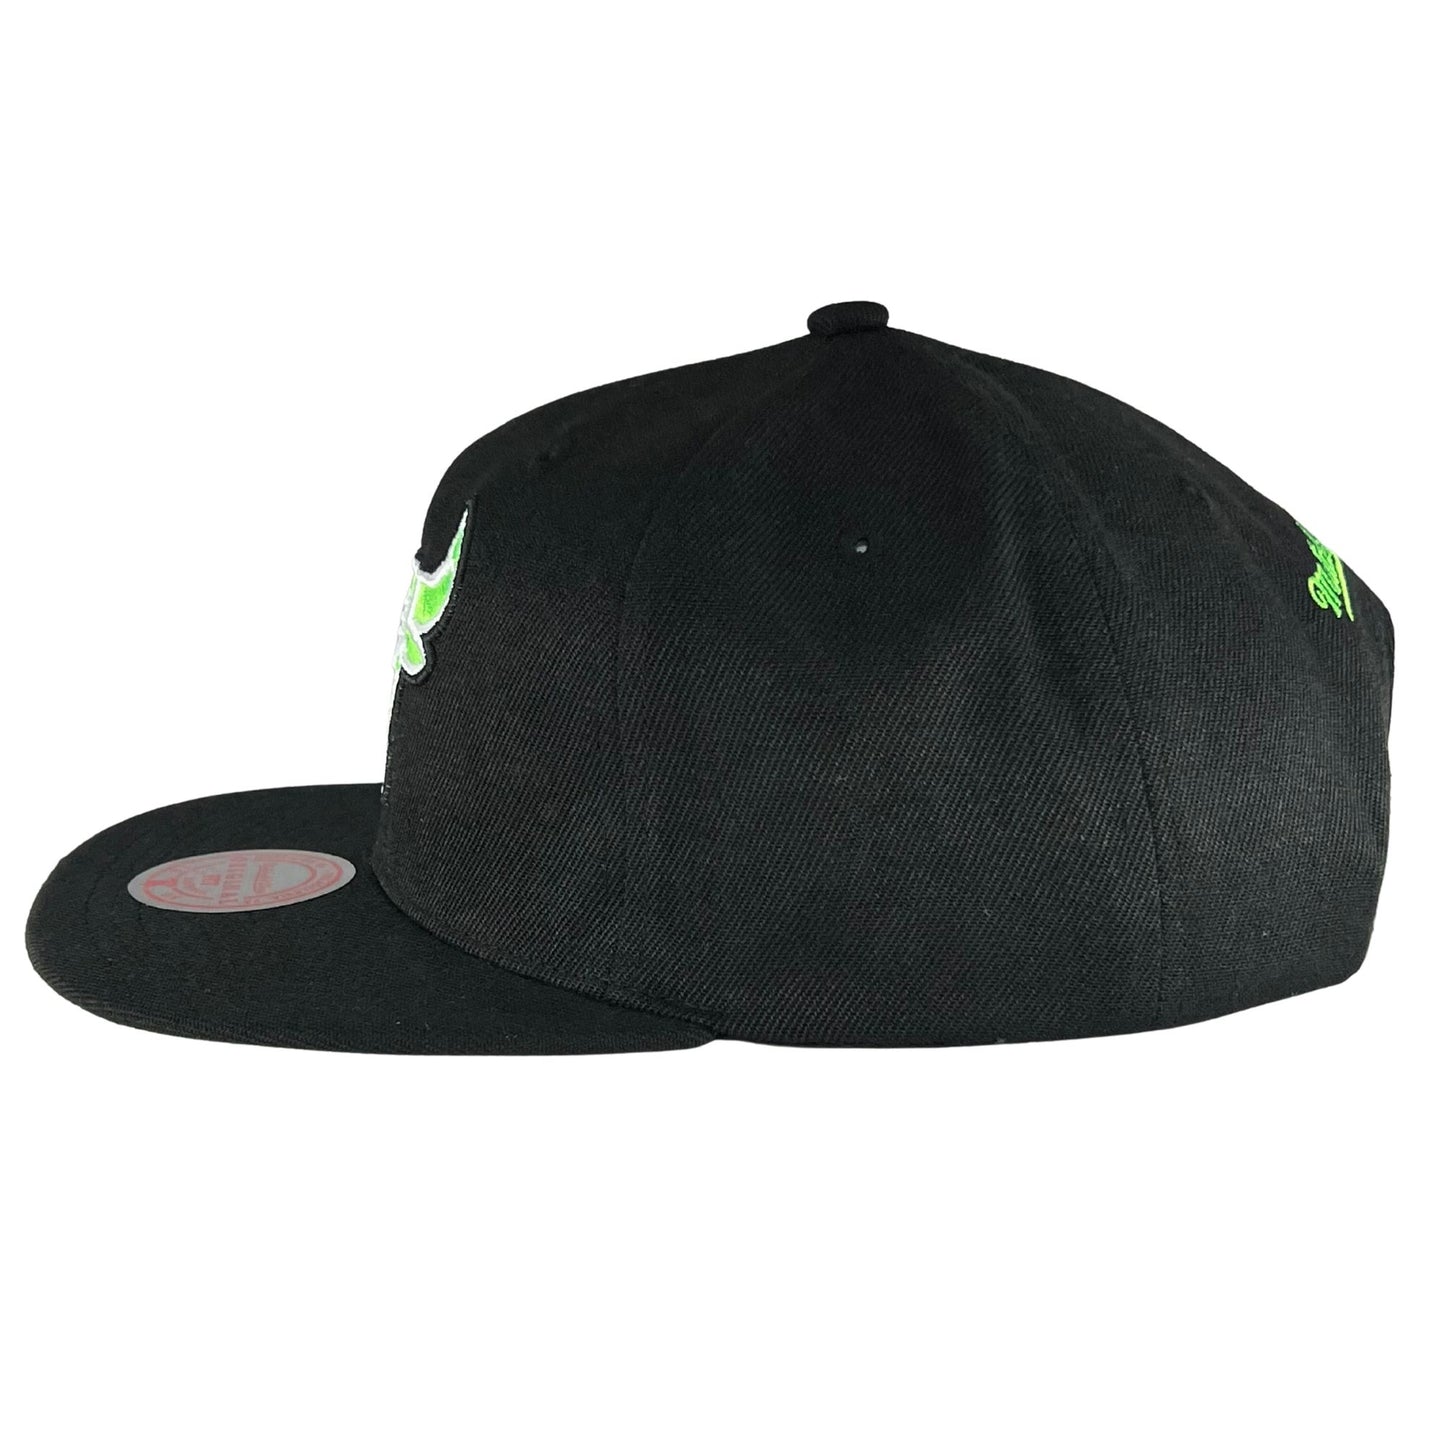 Chicago Bulls Black/Lime Snapback Hat